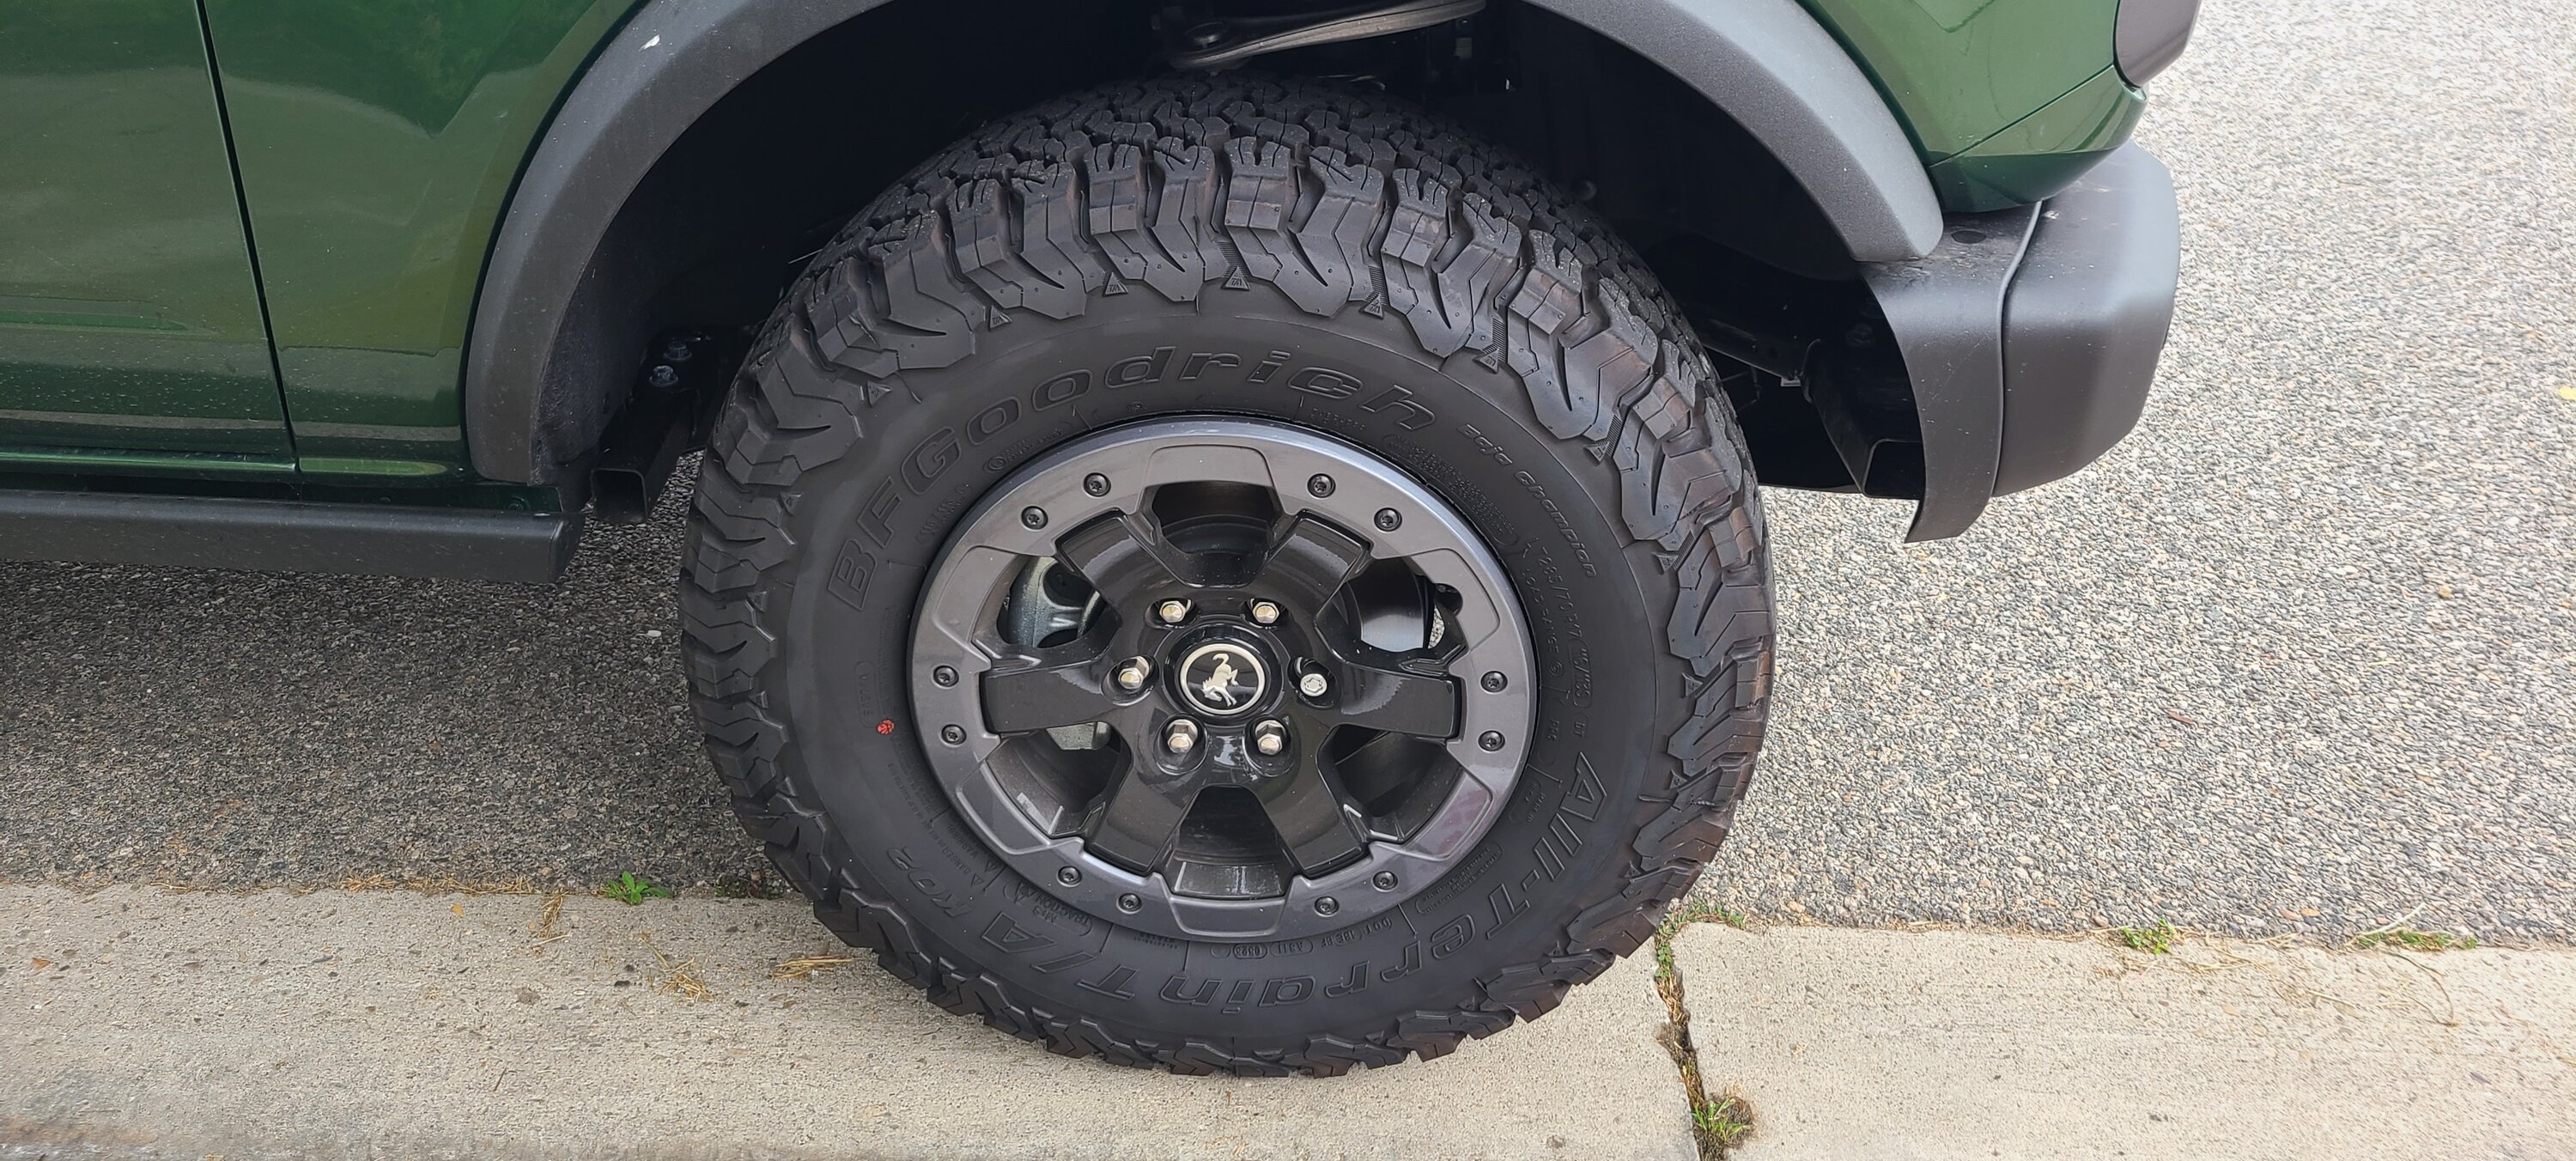 Ford Bronco Badlands Optional Wheels & Tires, Beadlock Capable - 33" BFG KO2 - $1200 20230614_083848